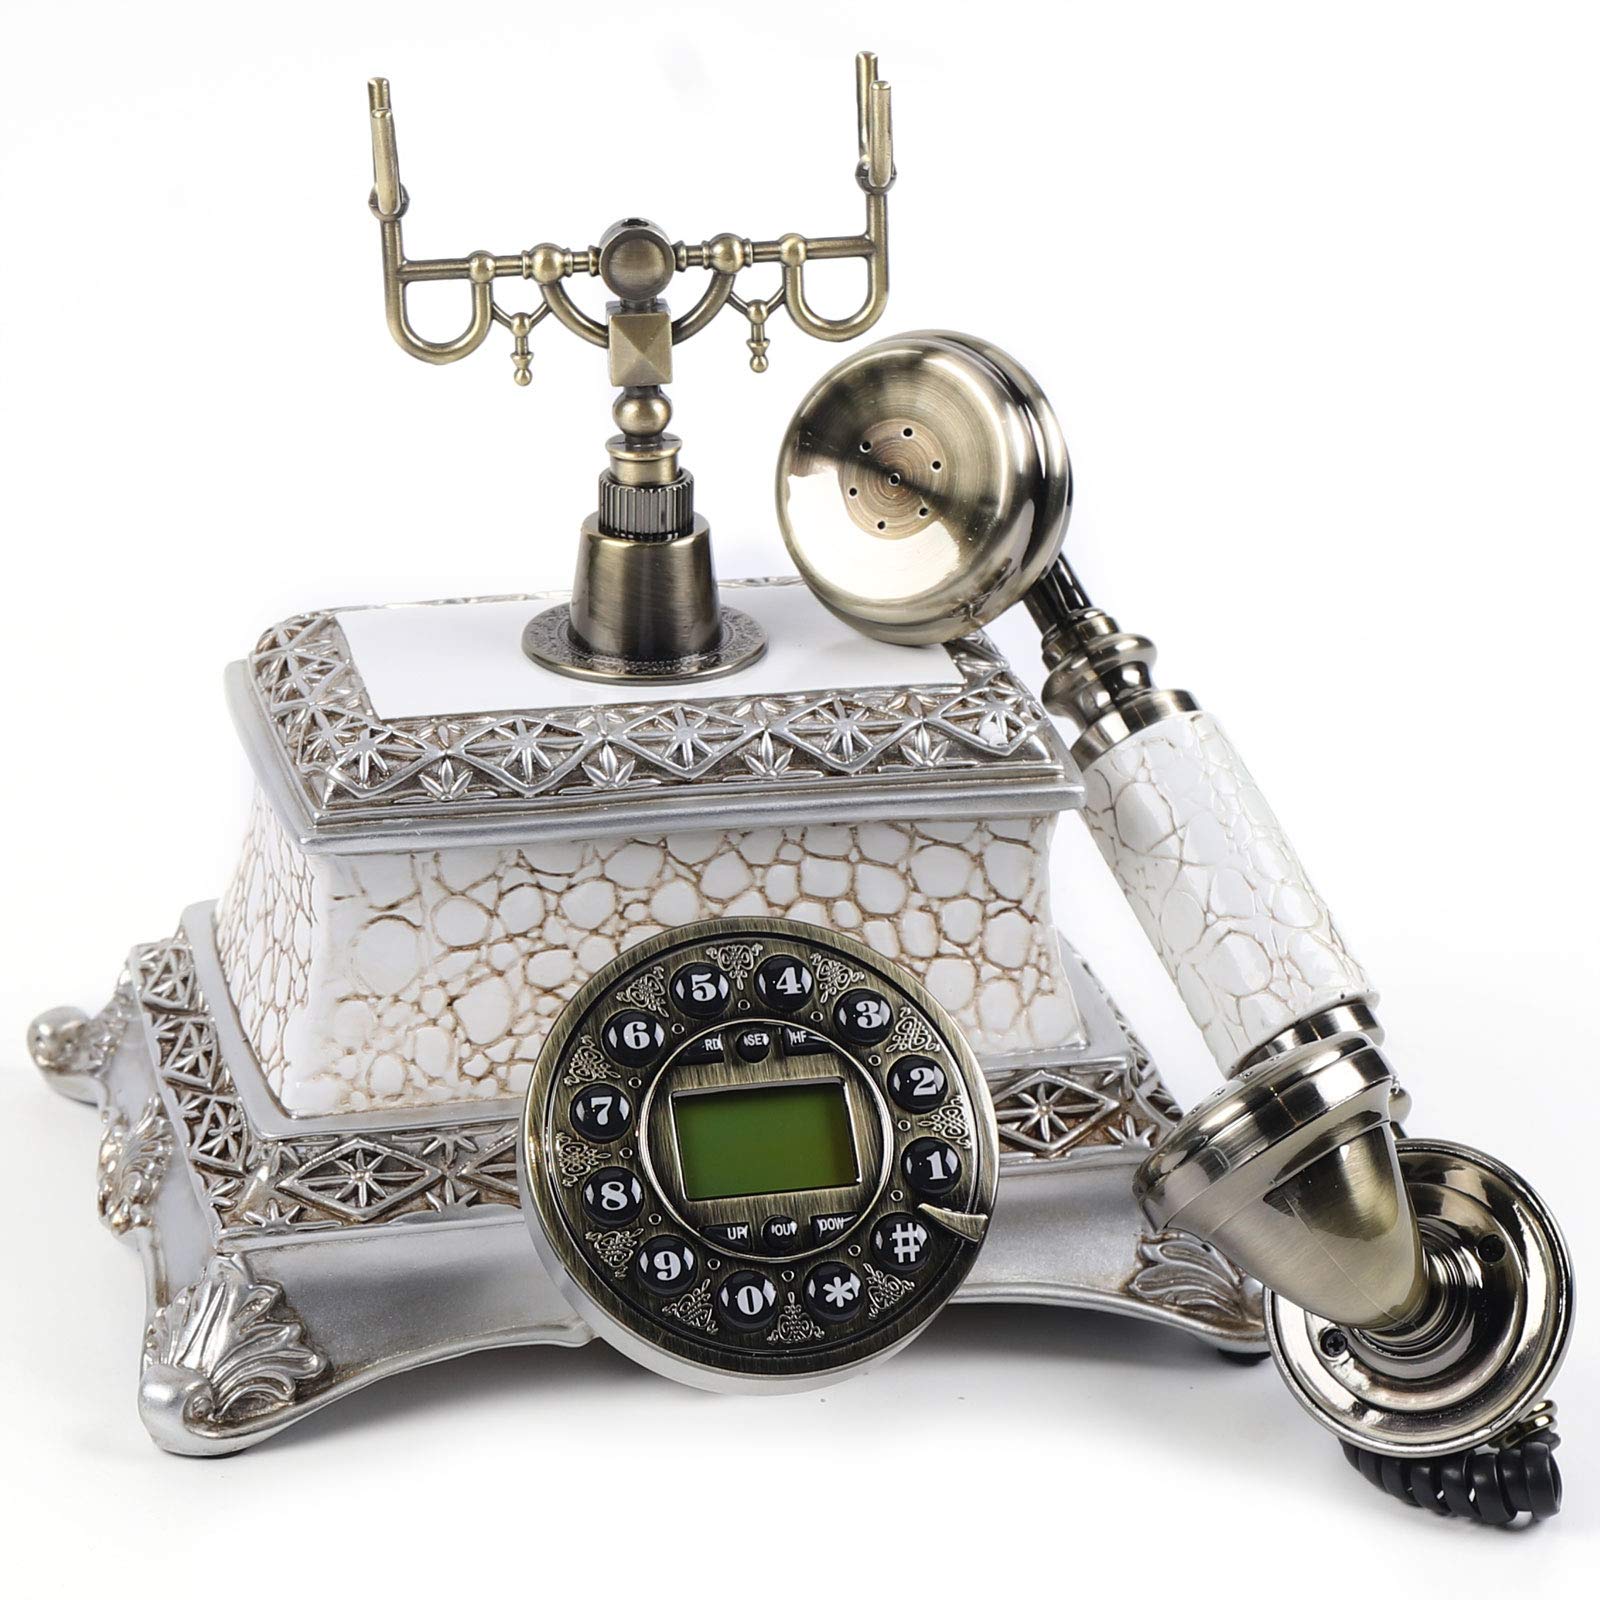 Antica linea telefonica nostalgica, linea telefonica libera decorativa da tavolo, resina + metallo